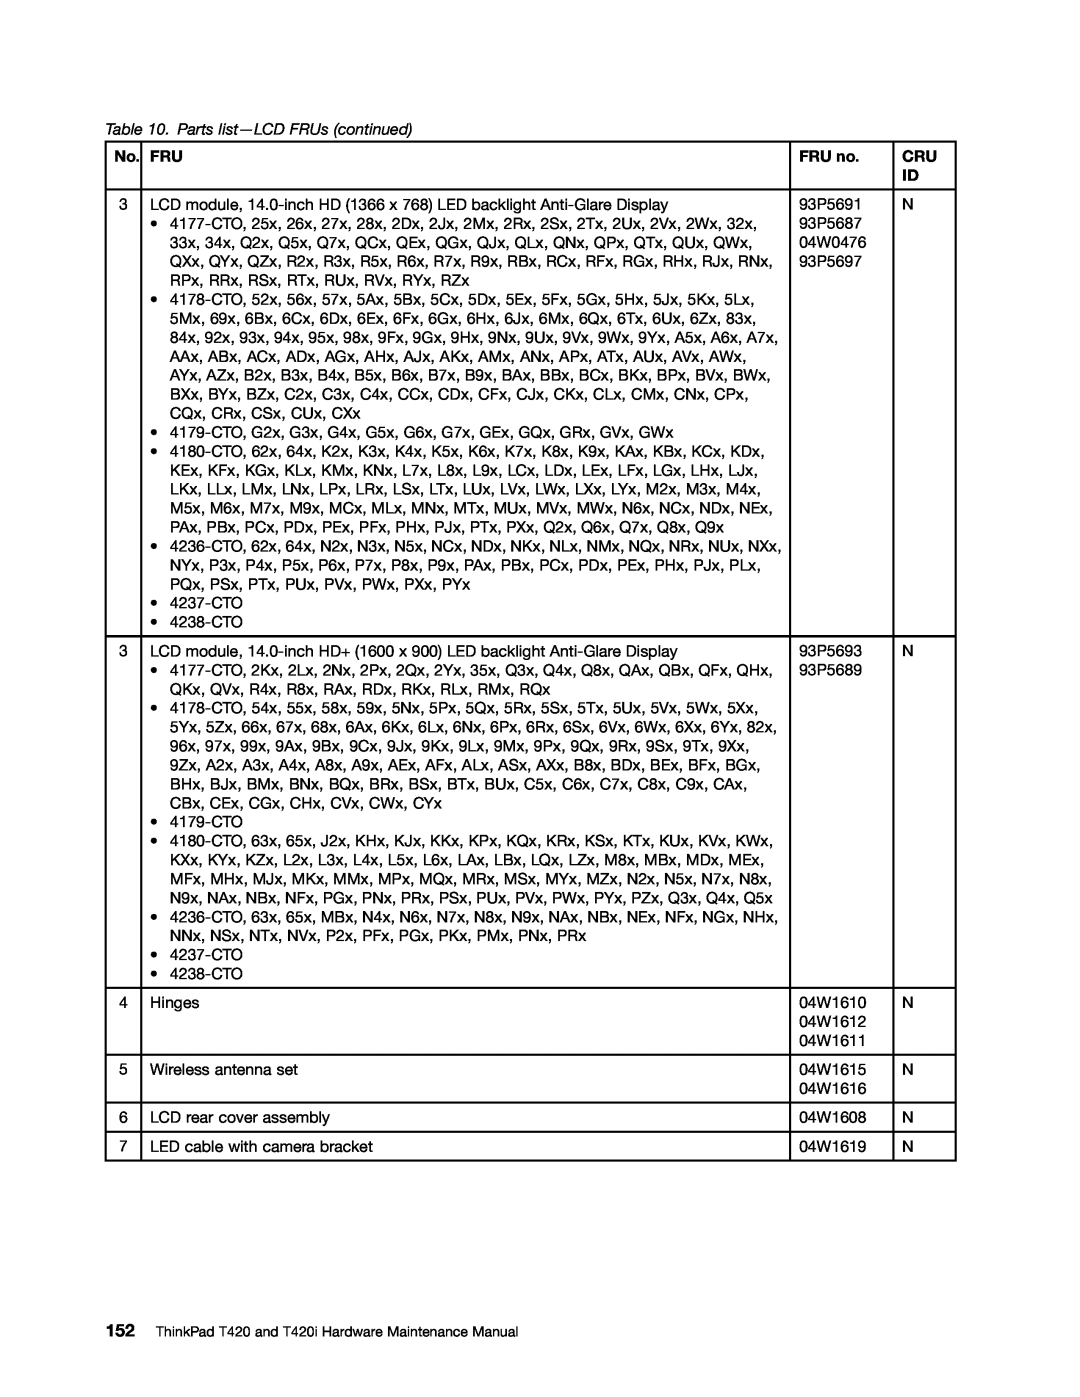 Lenovo manual Parts list-LCD FRUs continued, FRU no, ThinkPad T420 and T420i Hardware Maintenance Manual 